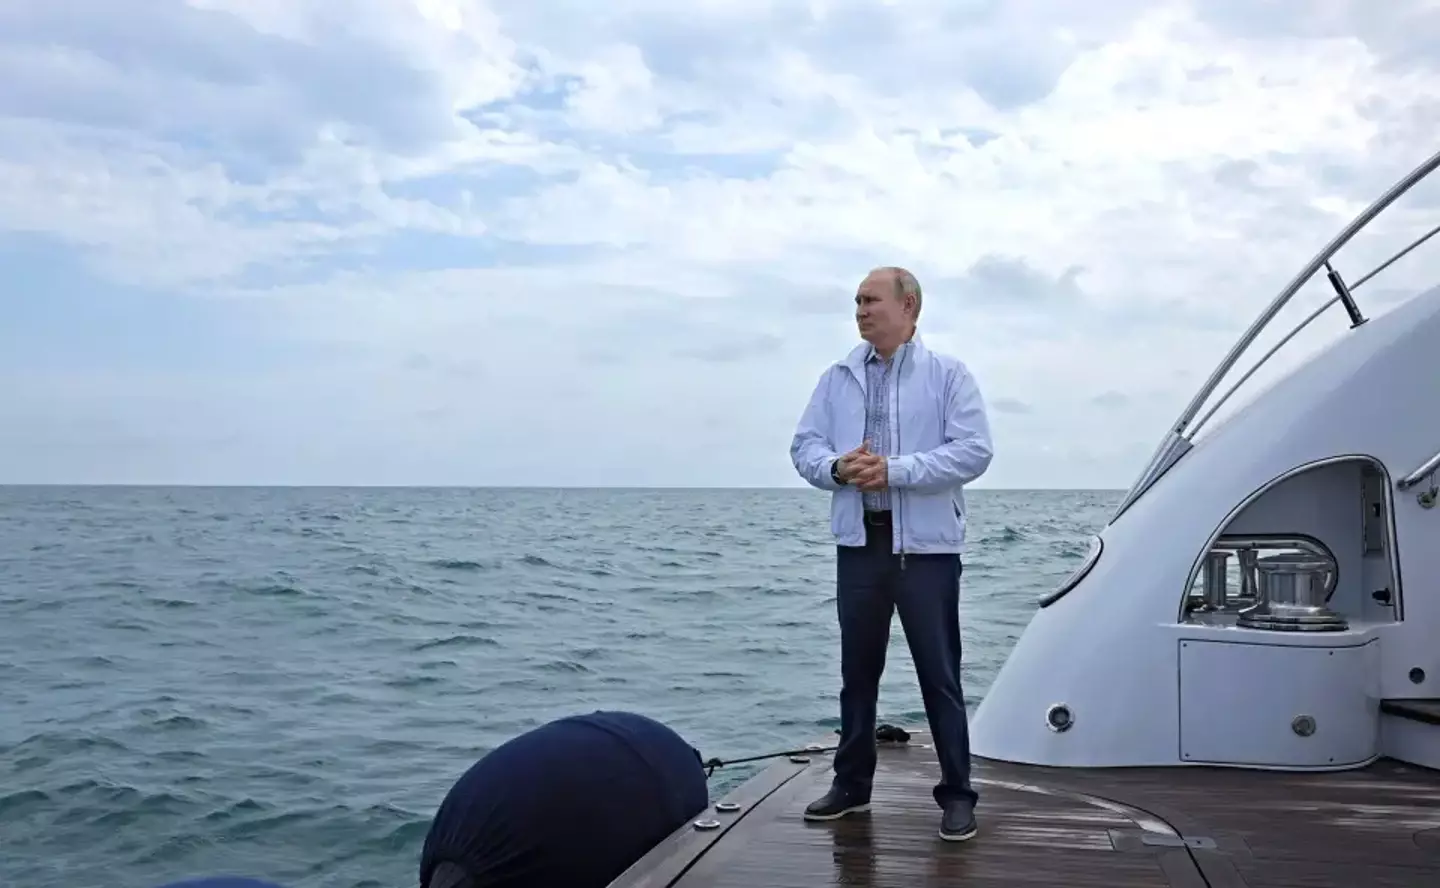 Putin onboard a different superyacht.